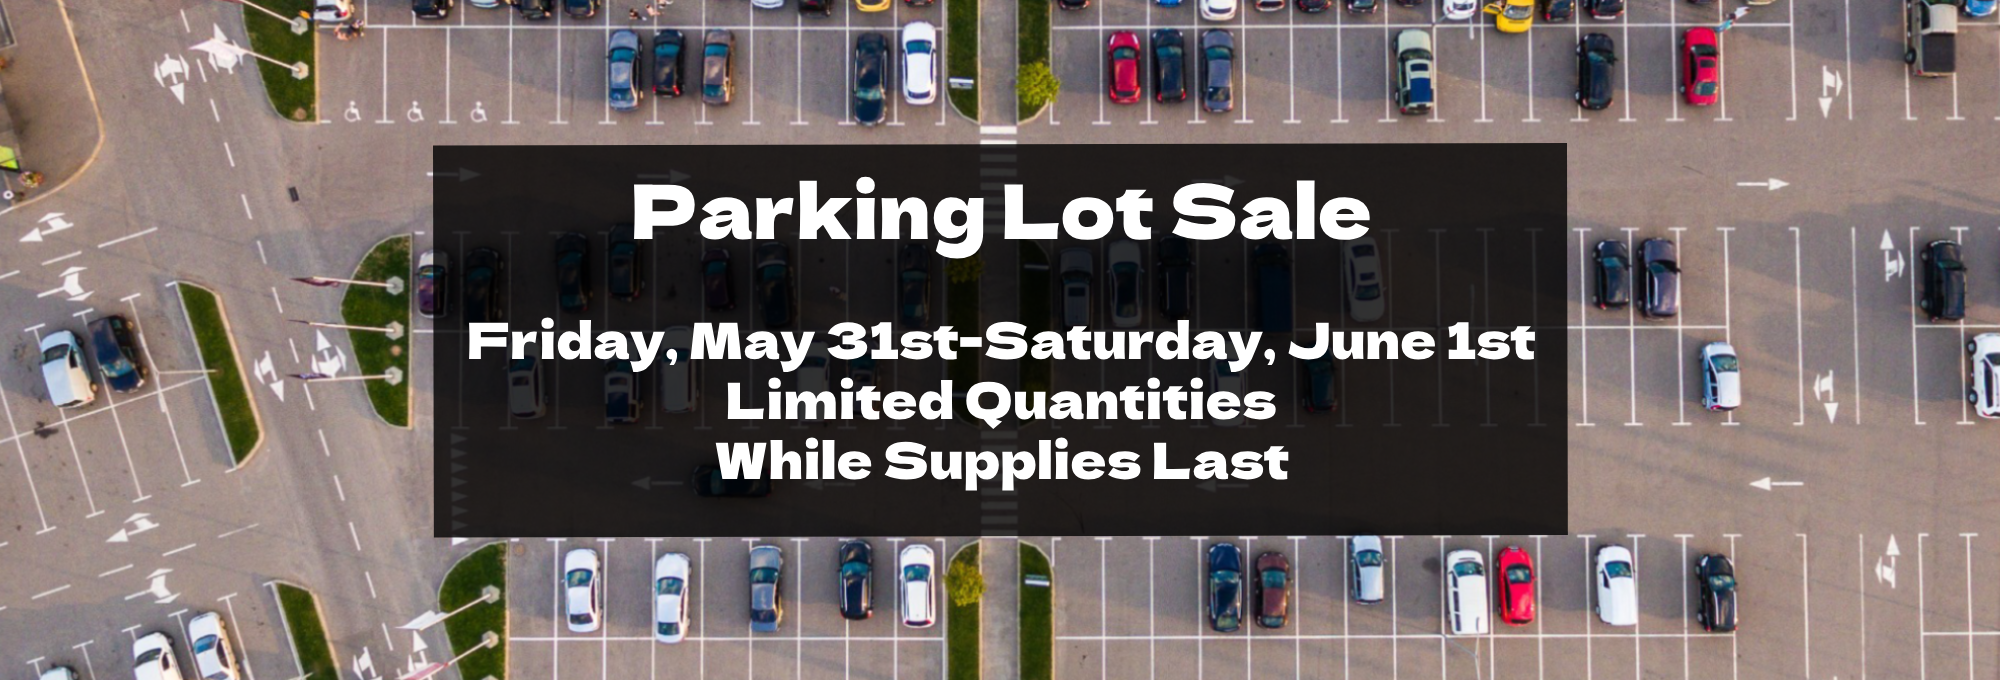 Parking-Lot-Sale-Promo-Banner